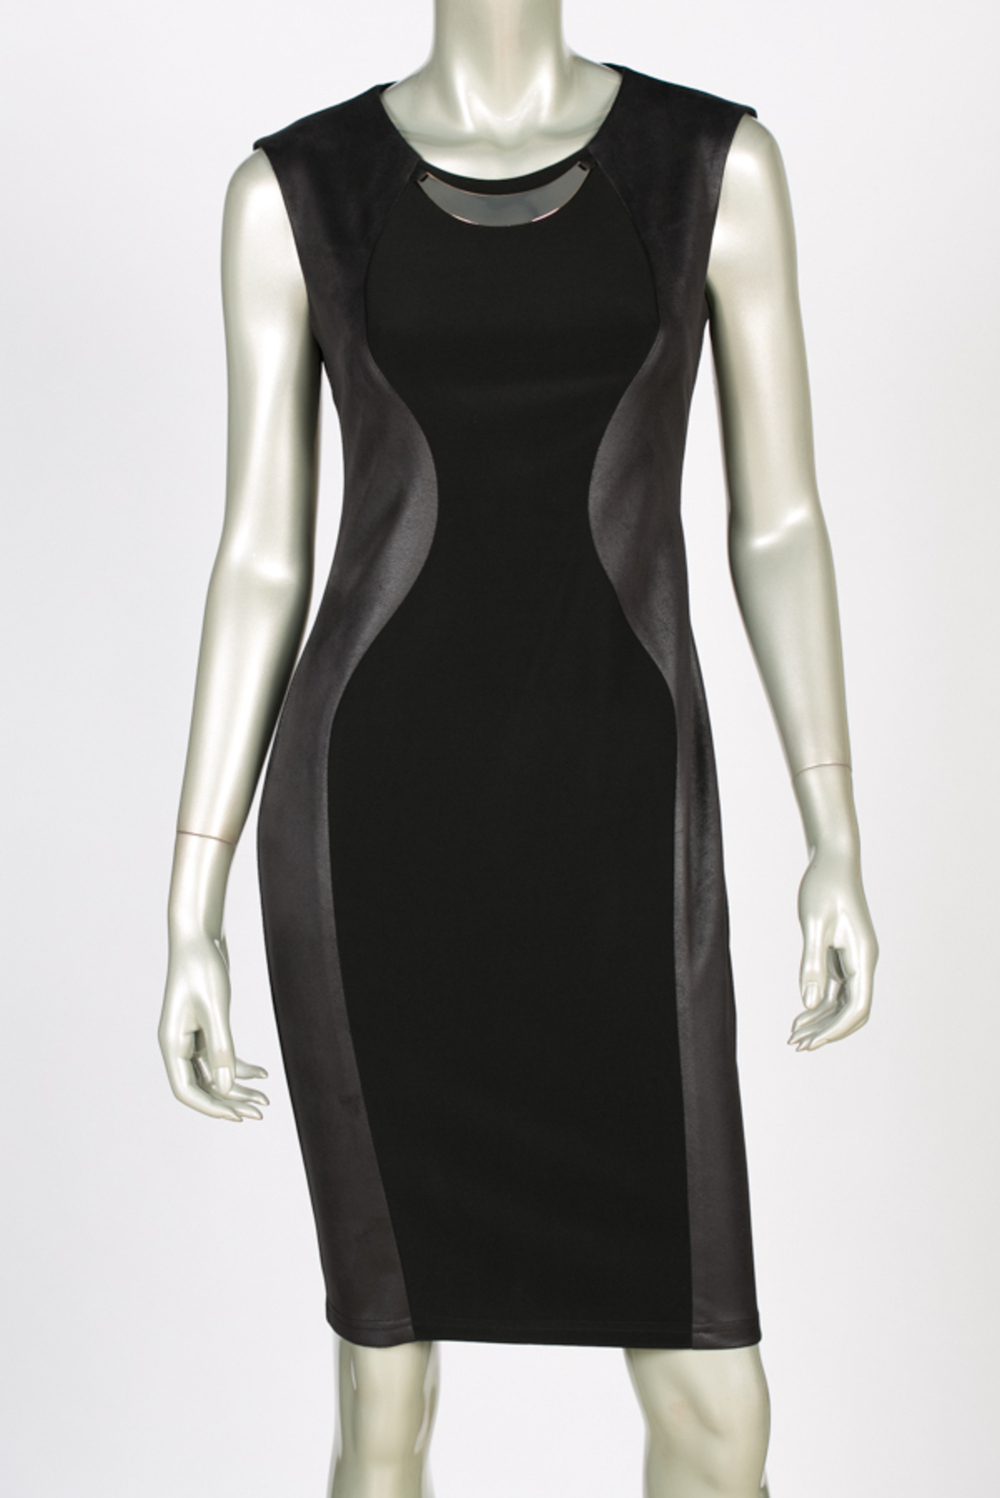 Joseph Ribkoff dress style 143554. Black/black